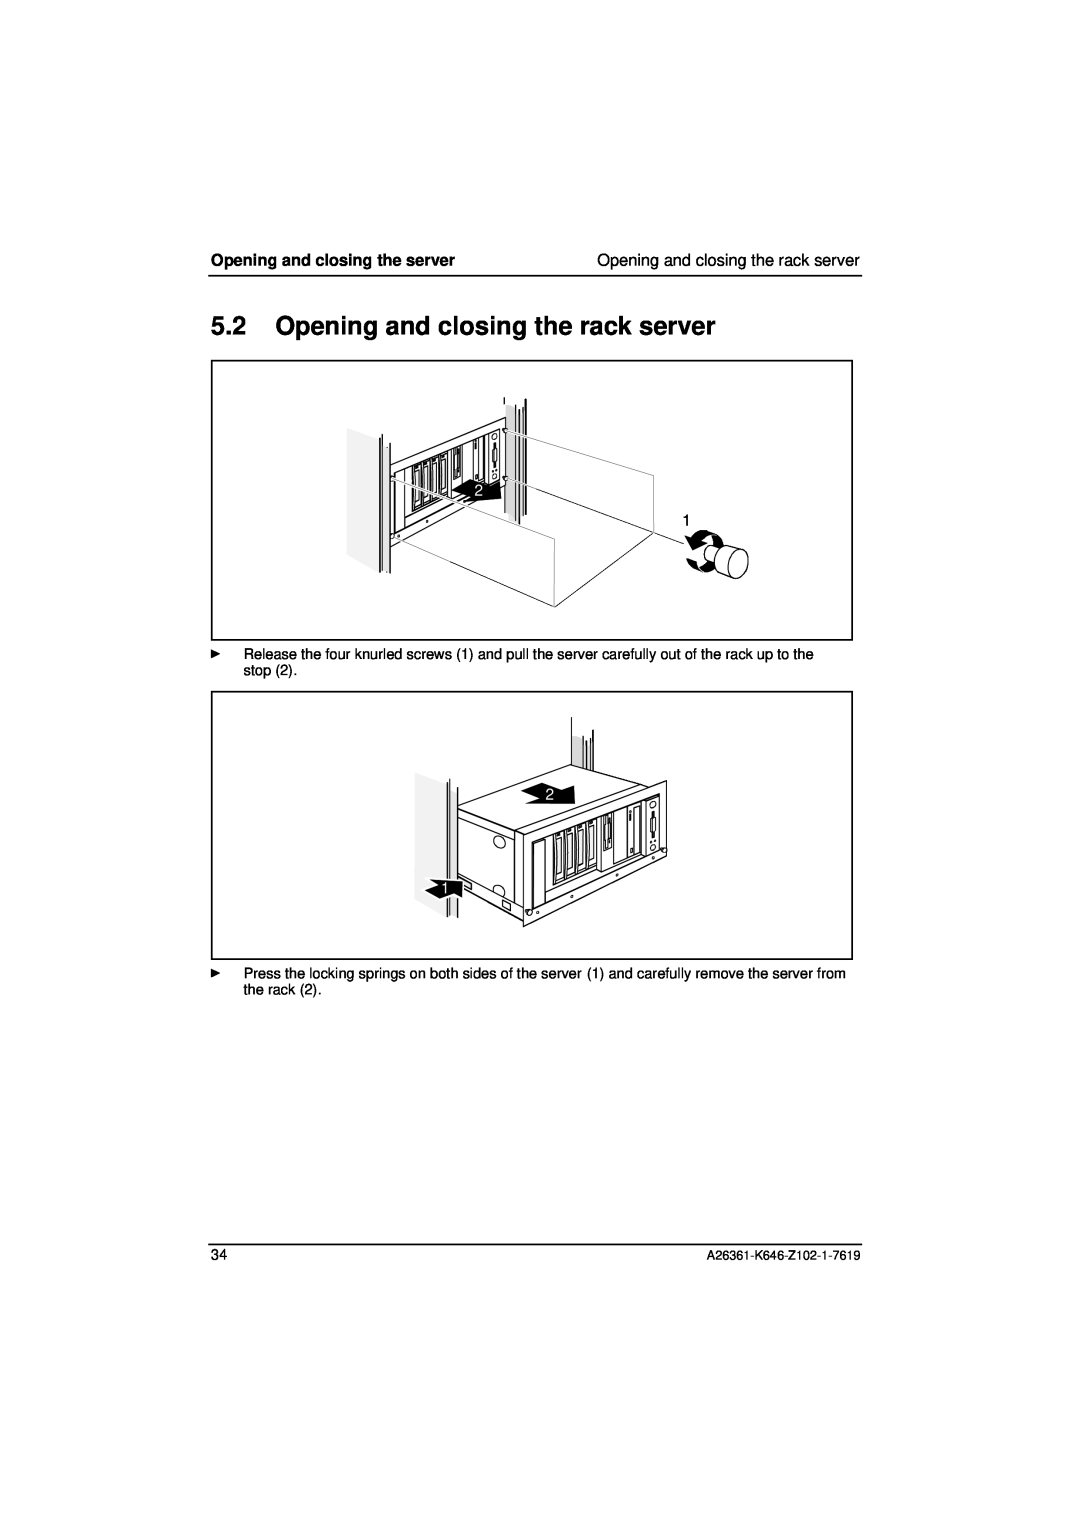 Fujitsu B120 manual Opening and closing the rack server, Opening and closing the server 